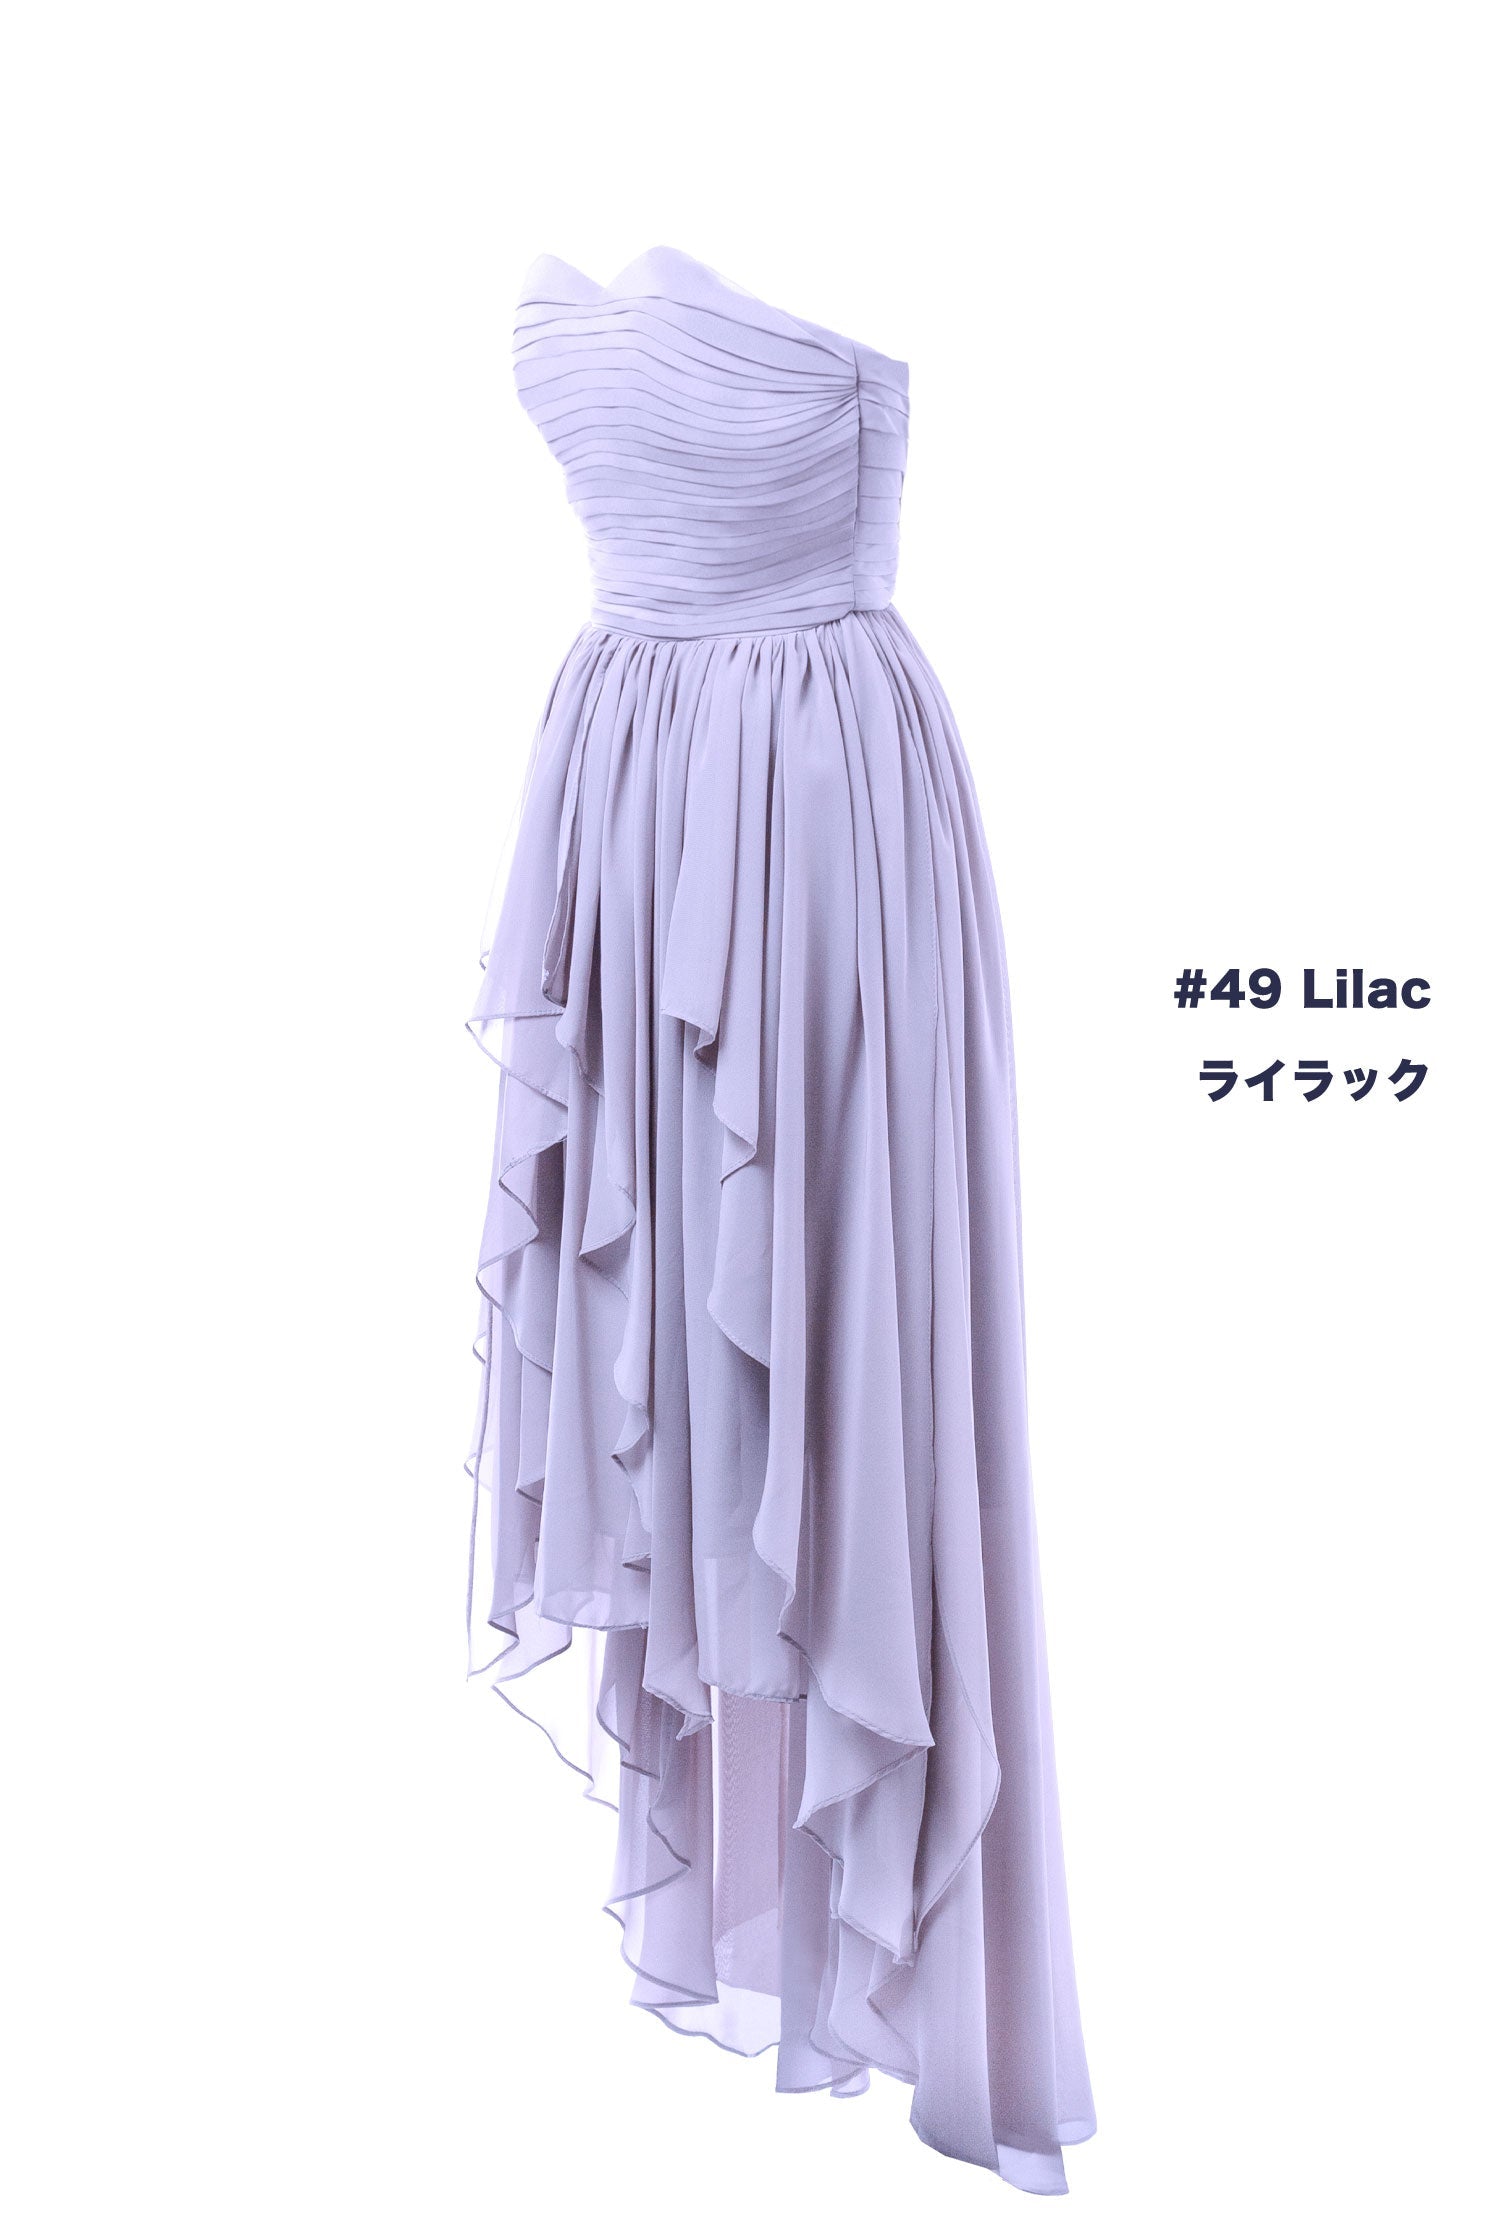 NV1016 Frill Skirt Chiffon Long Dress 150 Colors